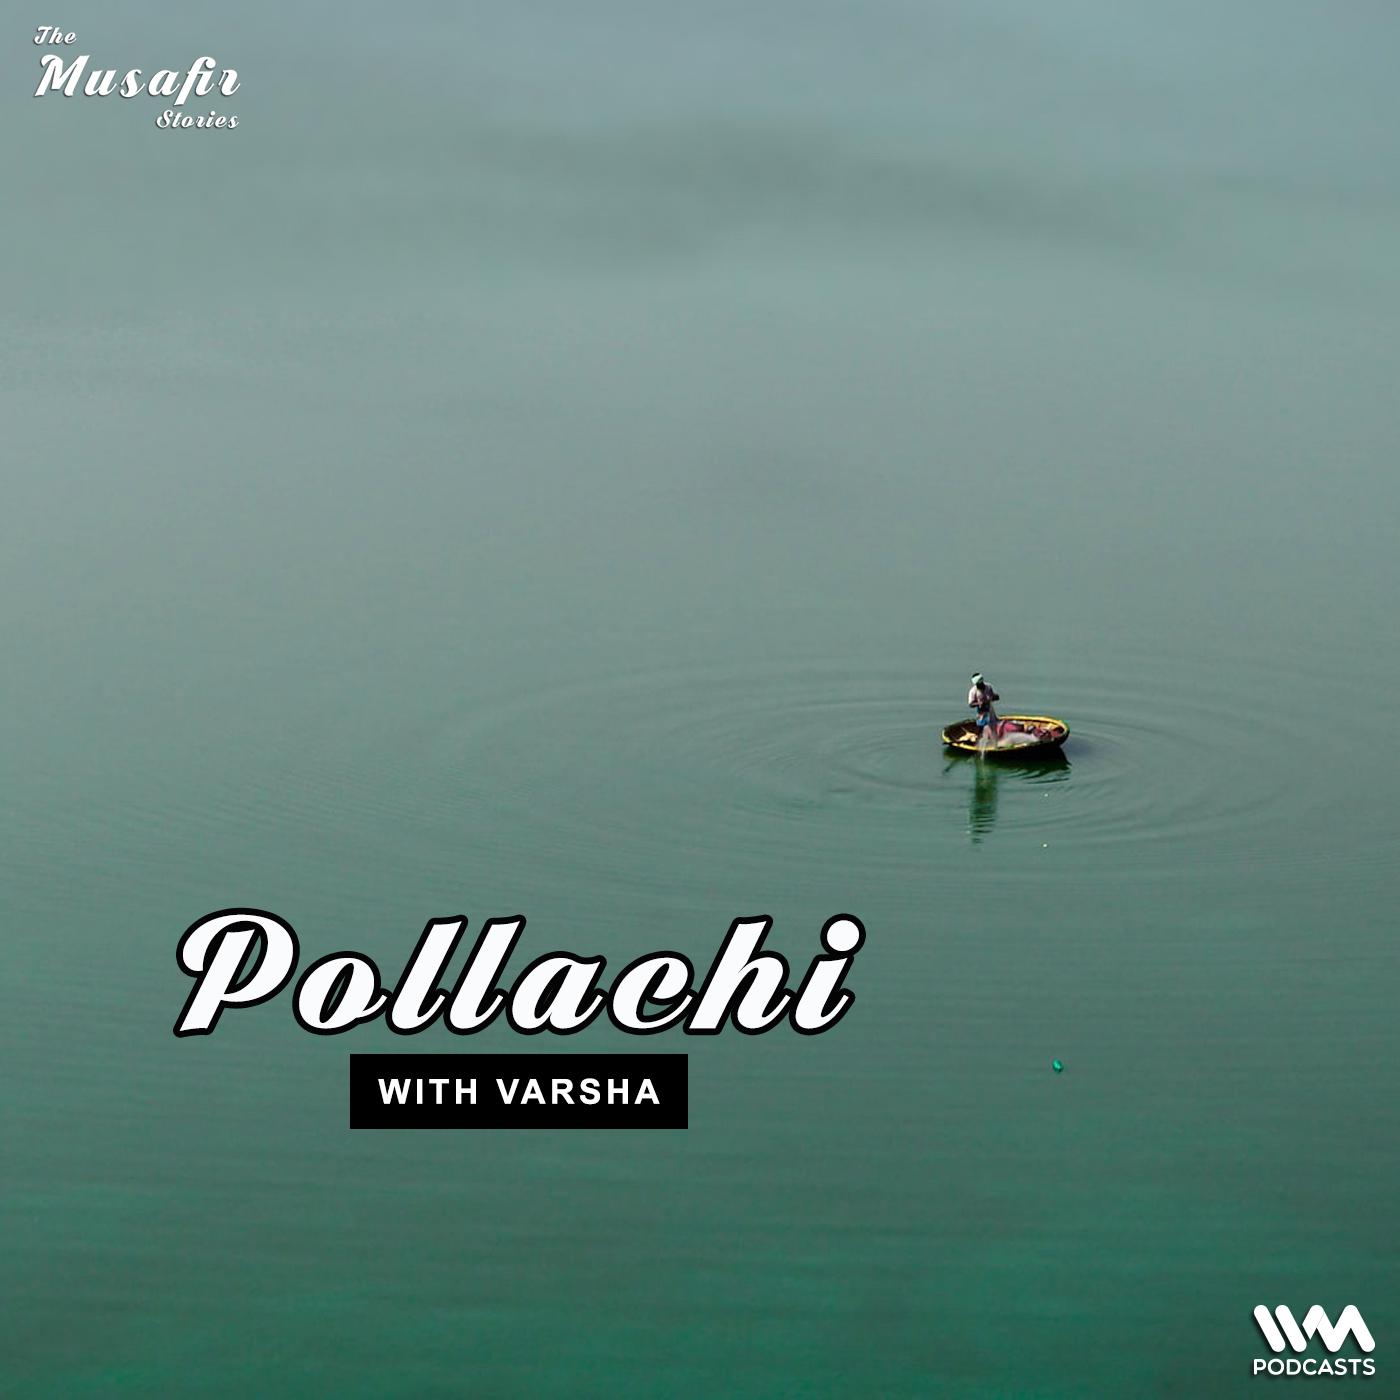 Pollachi with Varsha